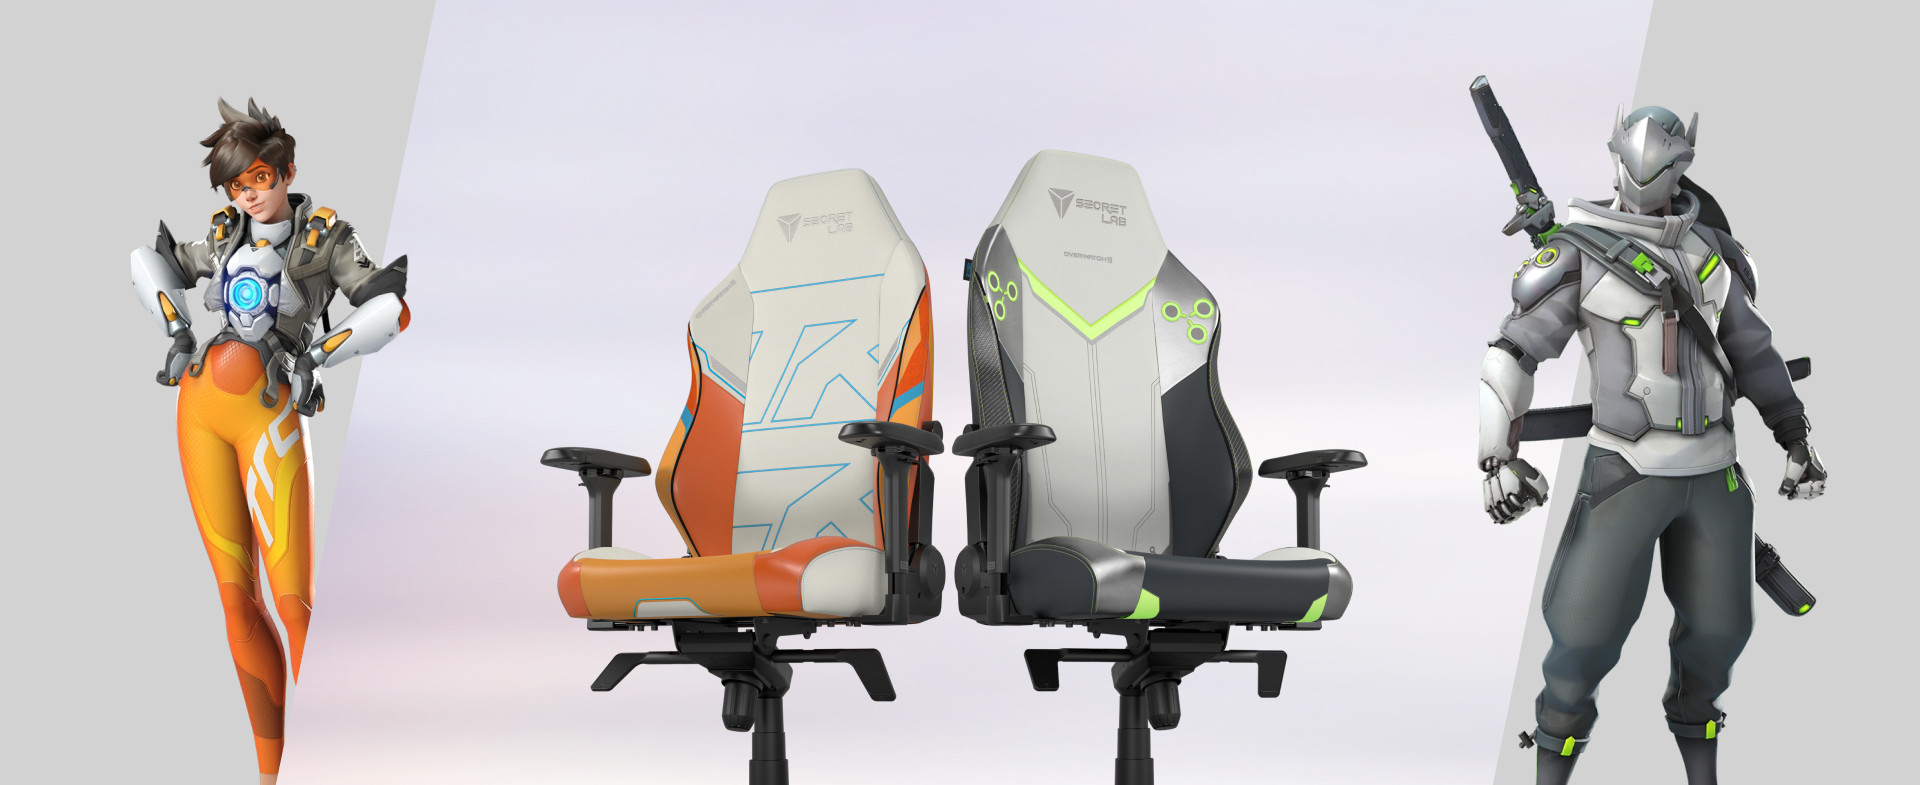 Secretlab x Overwatch - Secretlab TITAN Evo Special Edition Gaming Chairs